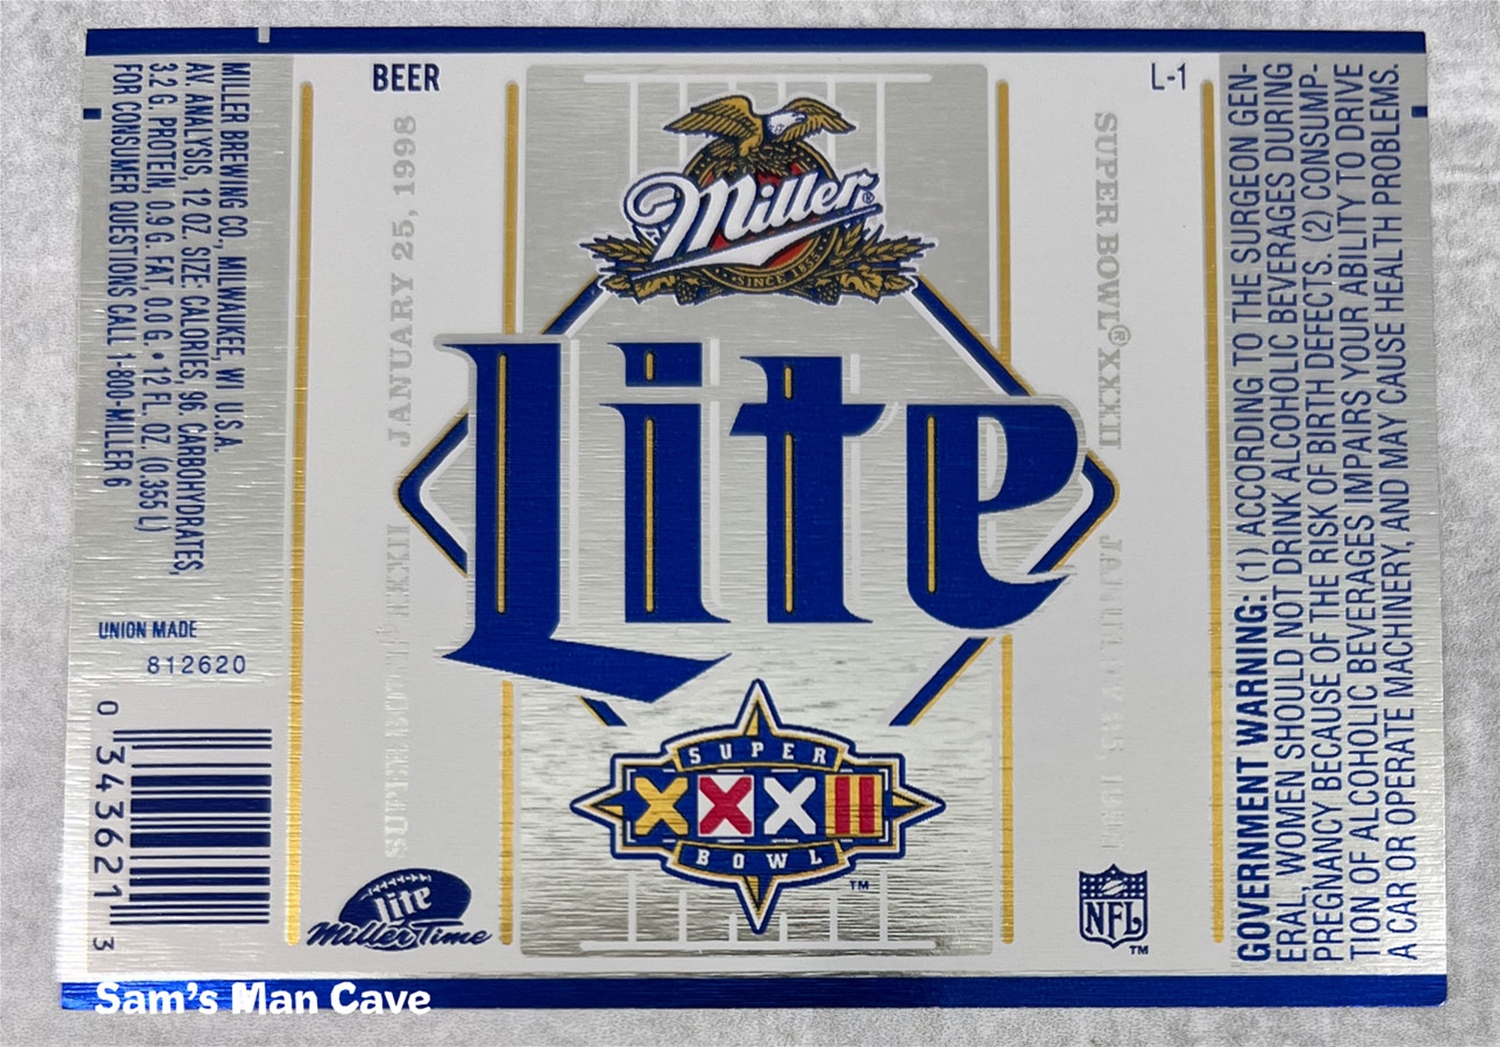 Miller Lite Super Bowl XXXII Beer Label